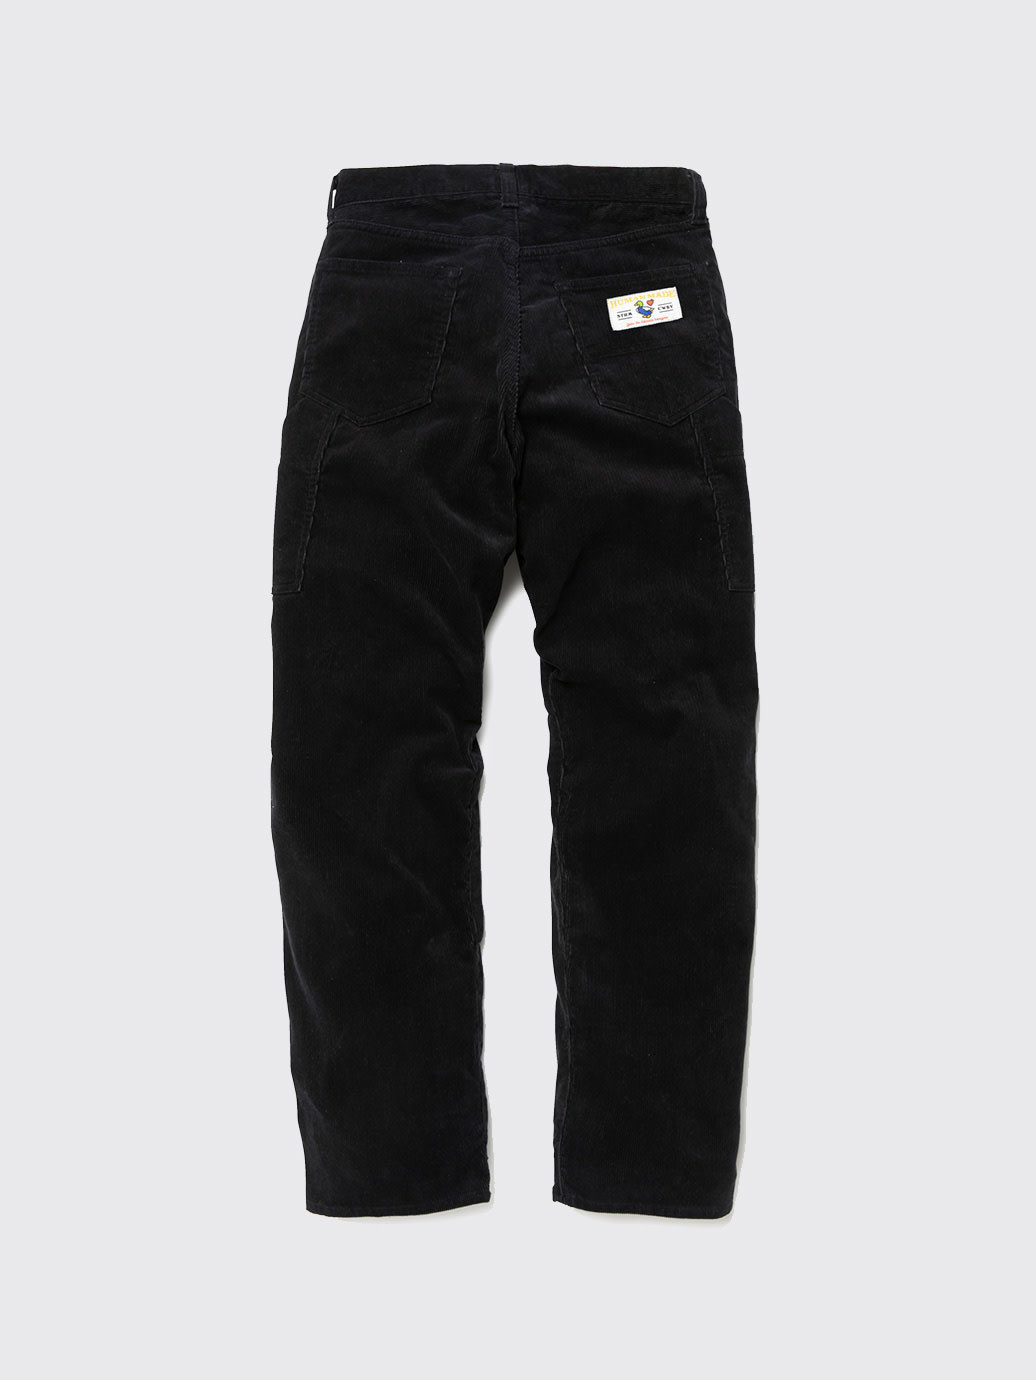 Human Made Corduroy Pants FW22 Black - OALLERY